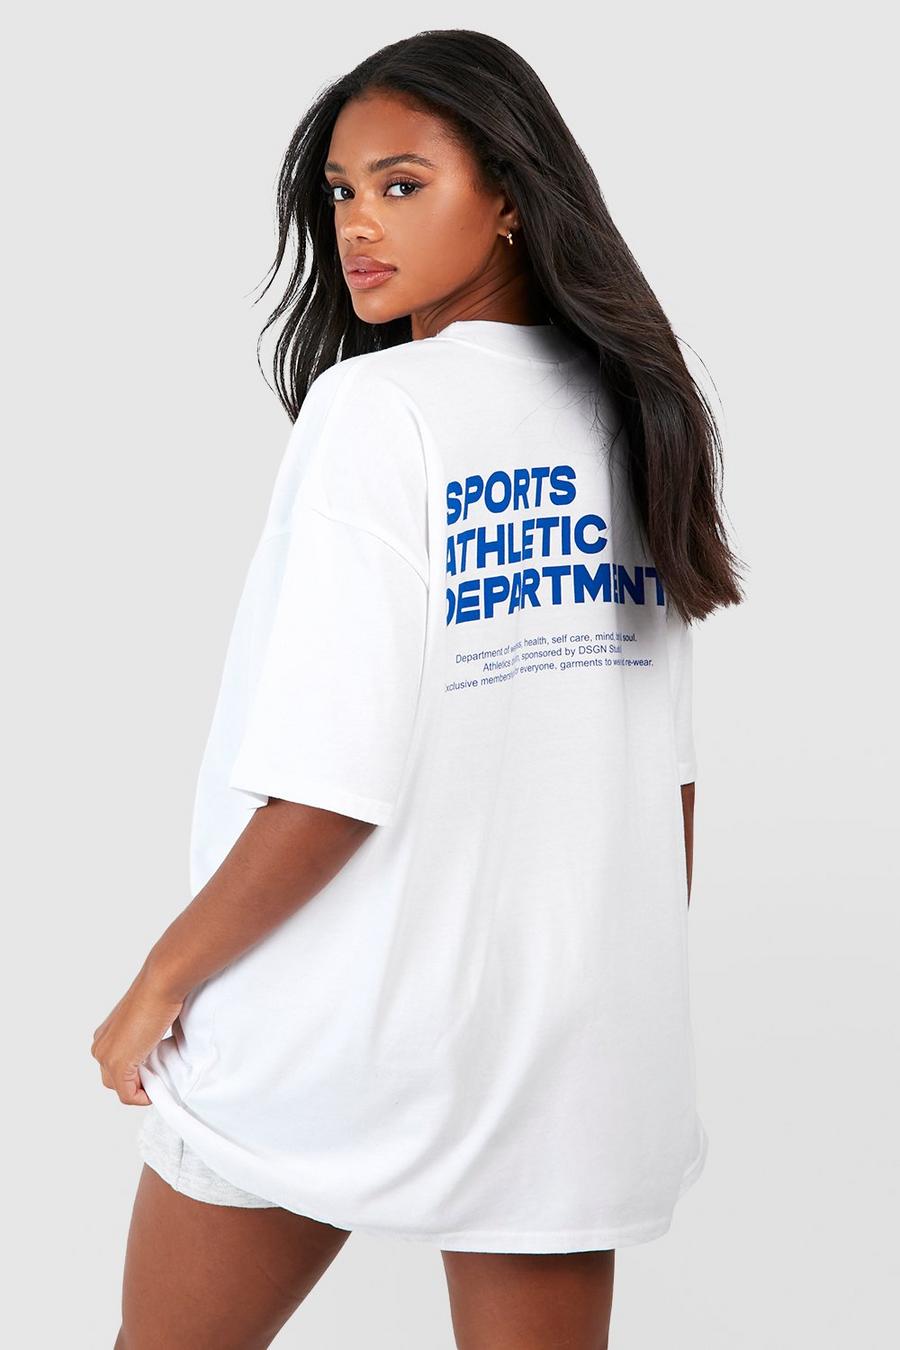 https://media.boohoo.com/i/boohoo/gzz69472_white_xl/female-white-sports-athletic-slogan-back-print-oversized-t-shirt-/?w=900&qlt=default&fmt.jp2.qlt=70&fmt=auto&sm=fit